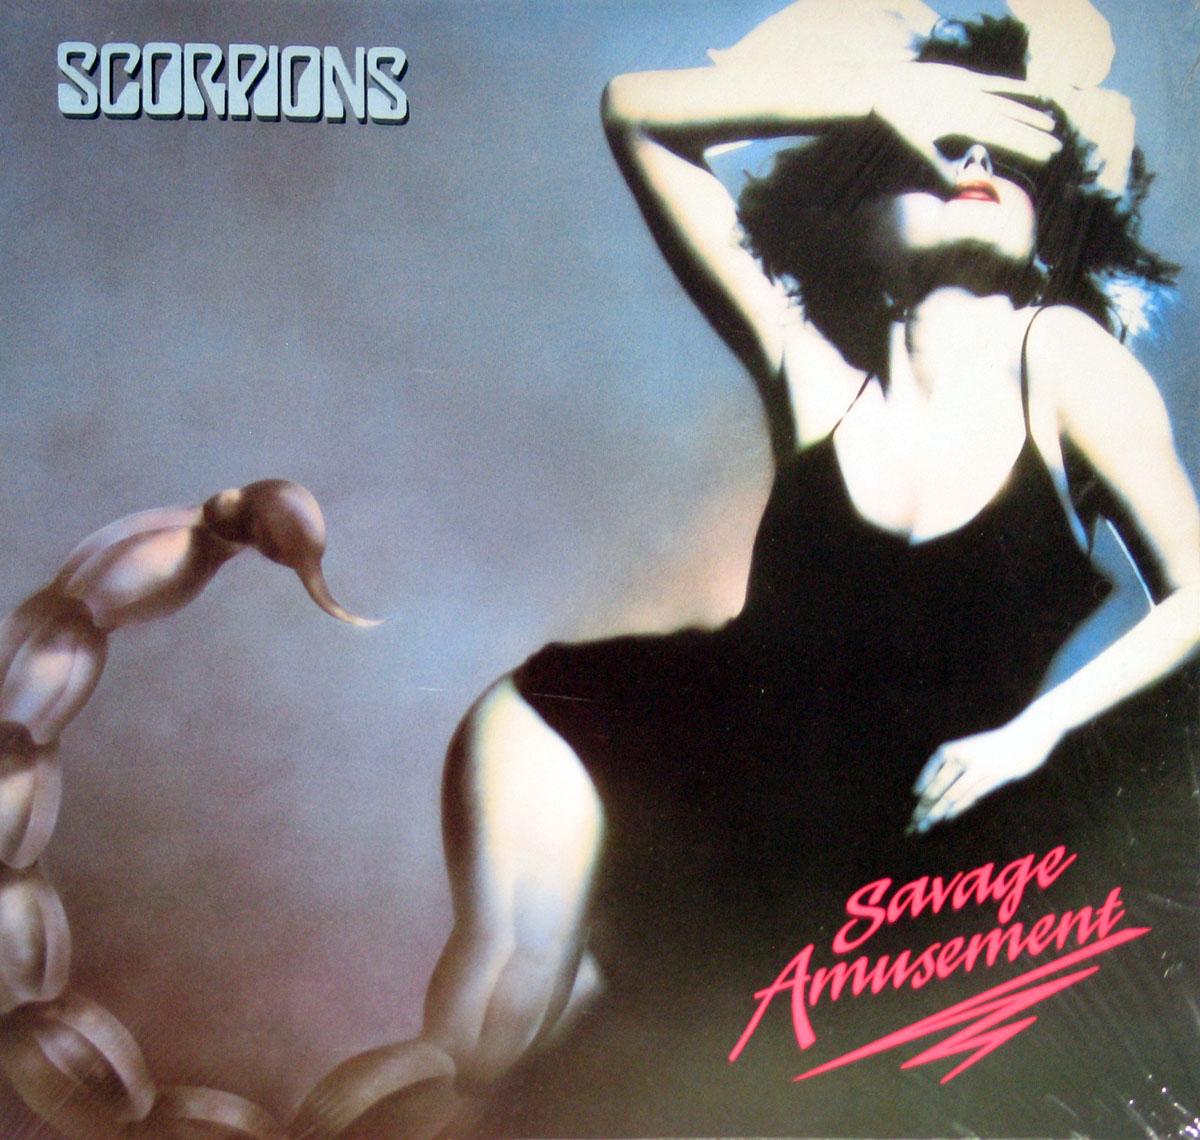 High Resolution Photo scorpions savage amusement Vinyl Record